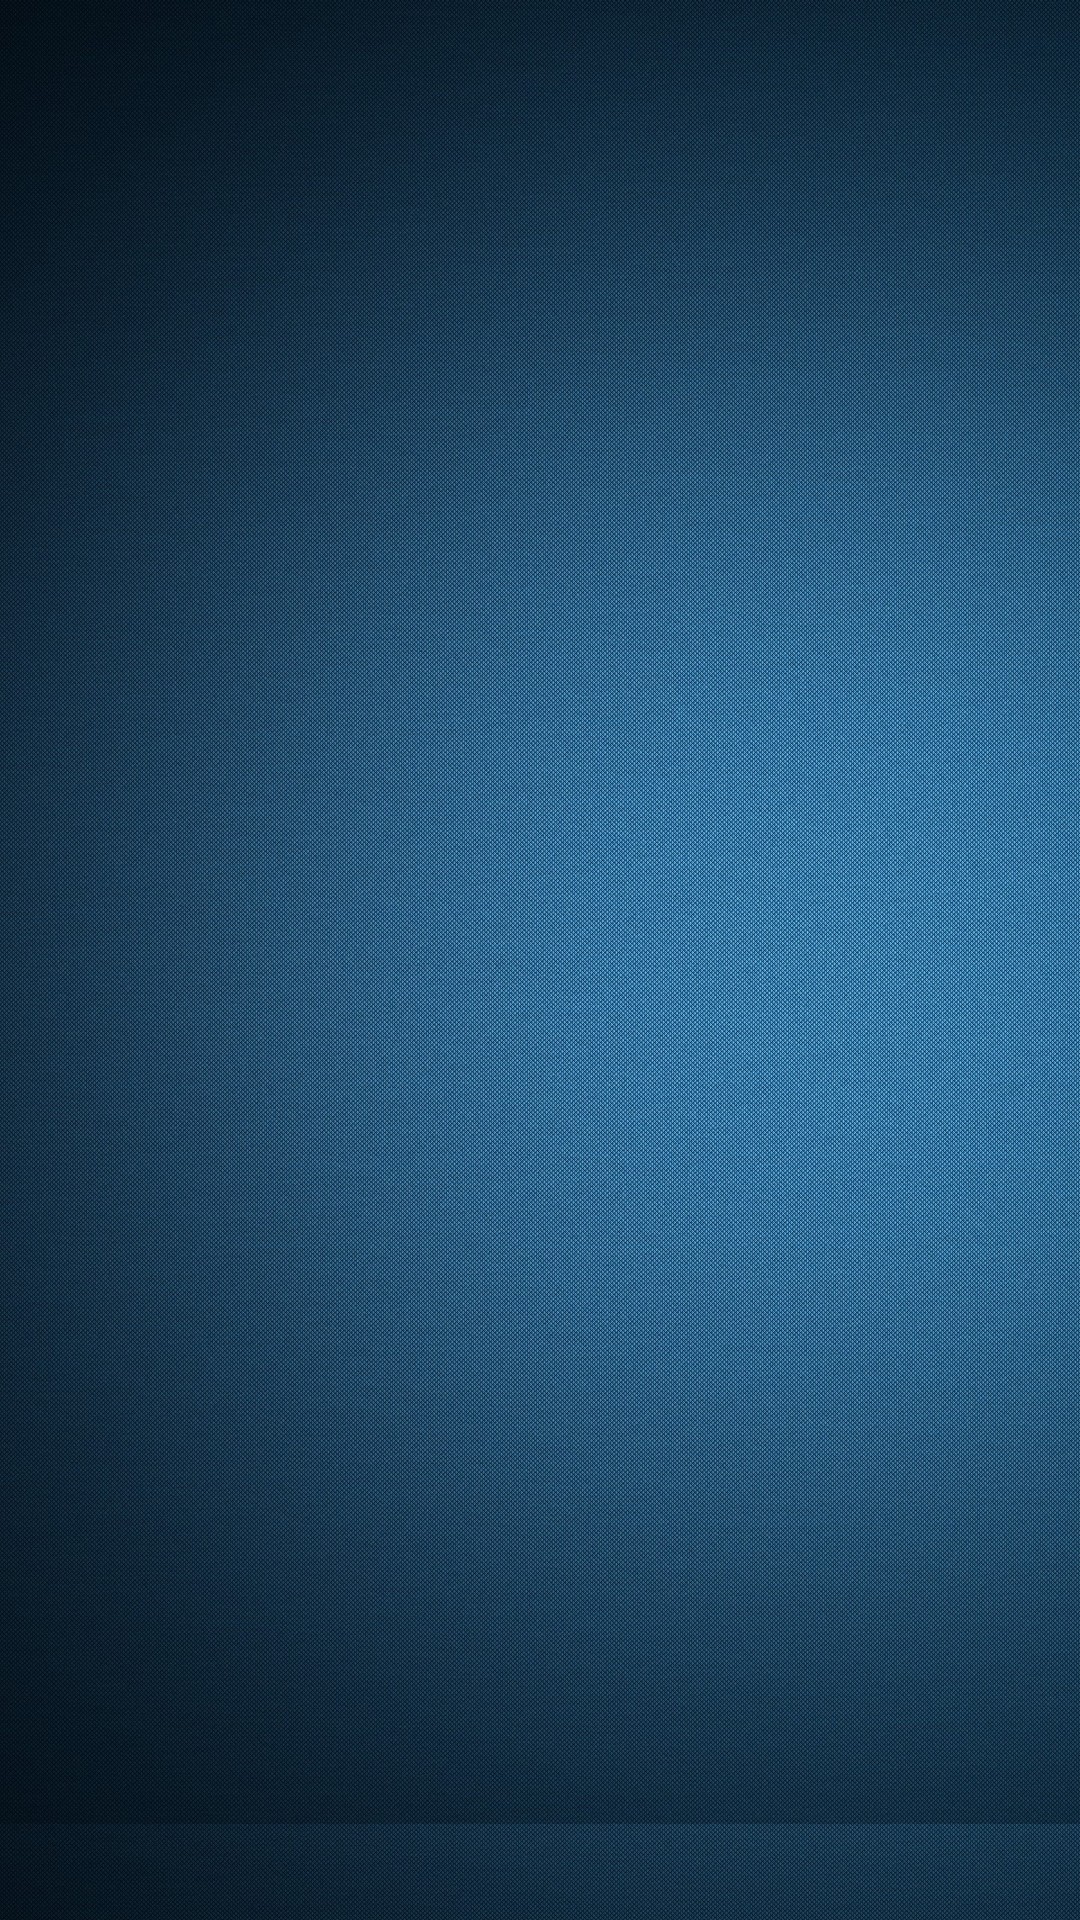 Blue Design iPhone Wallpaper